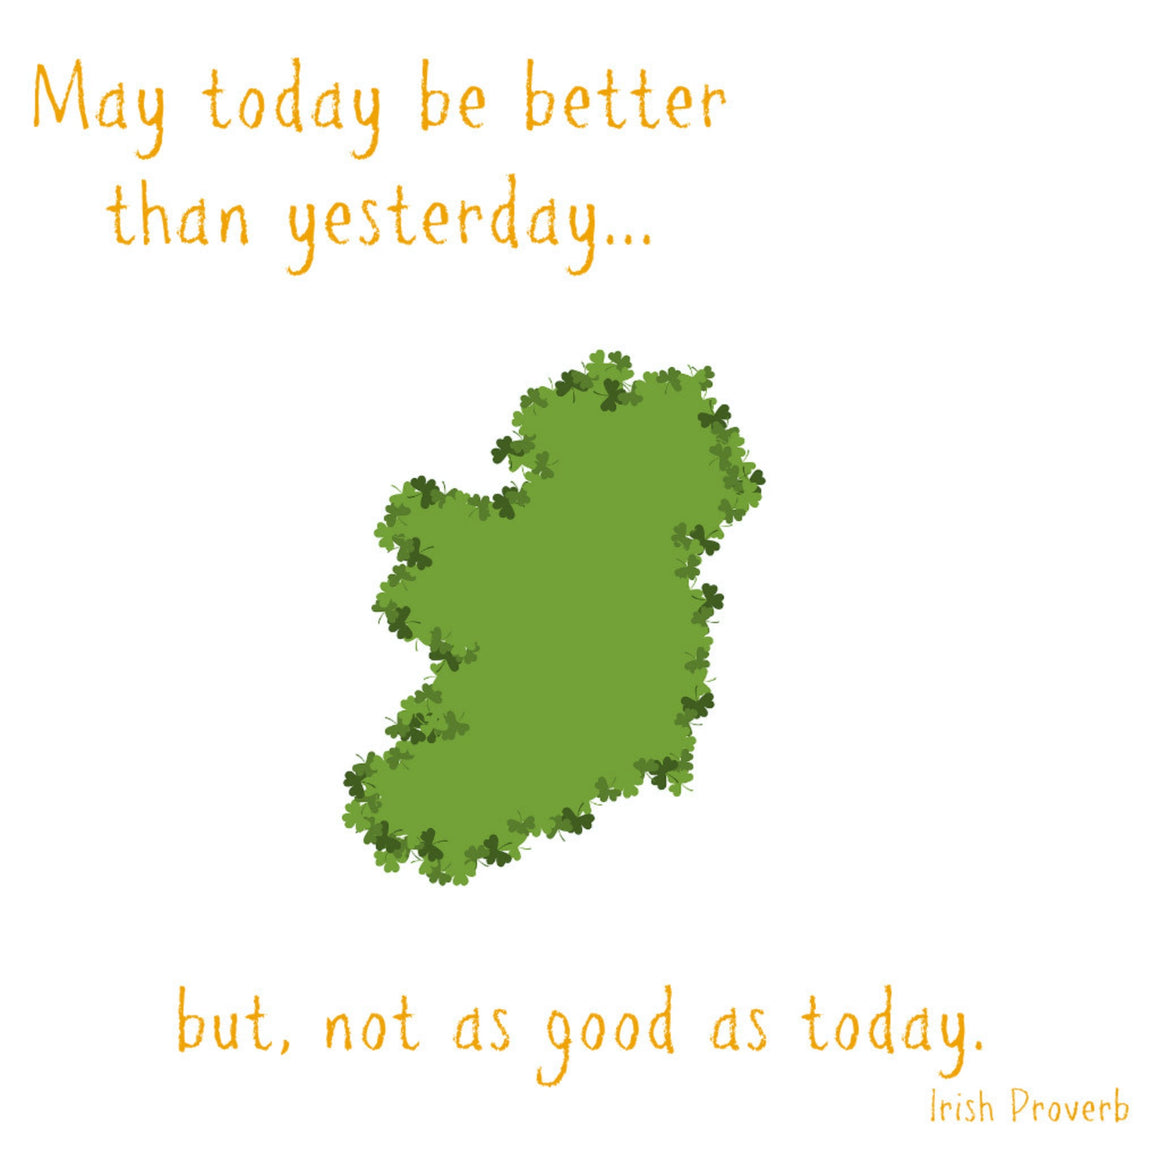 Irish Proverb 2